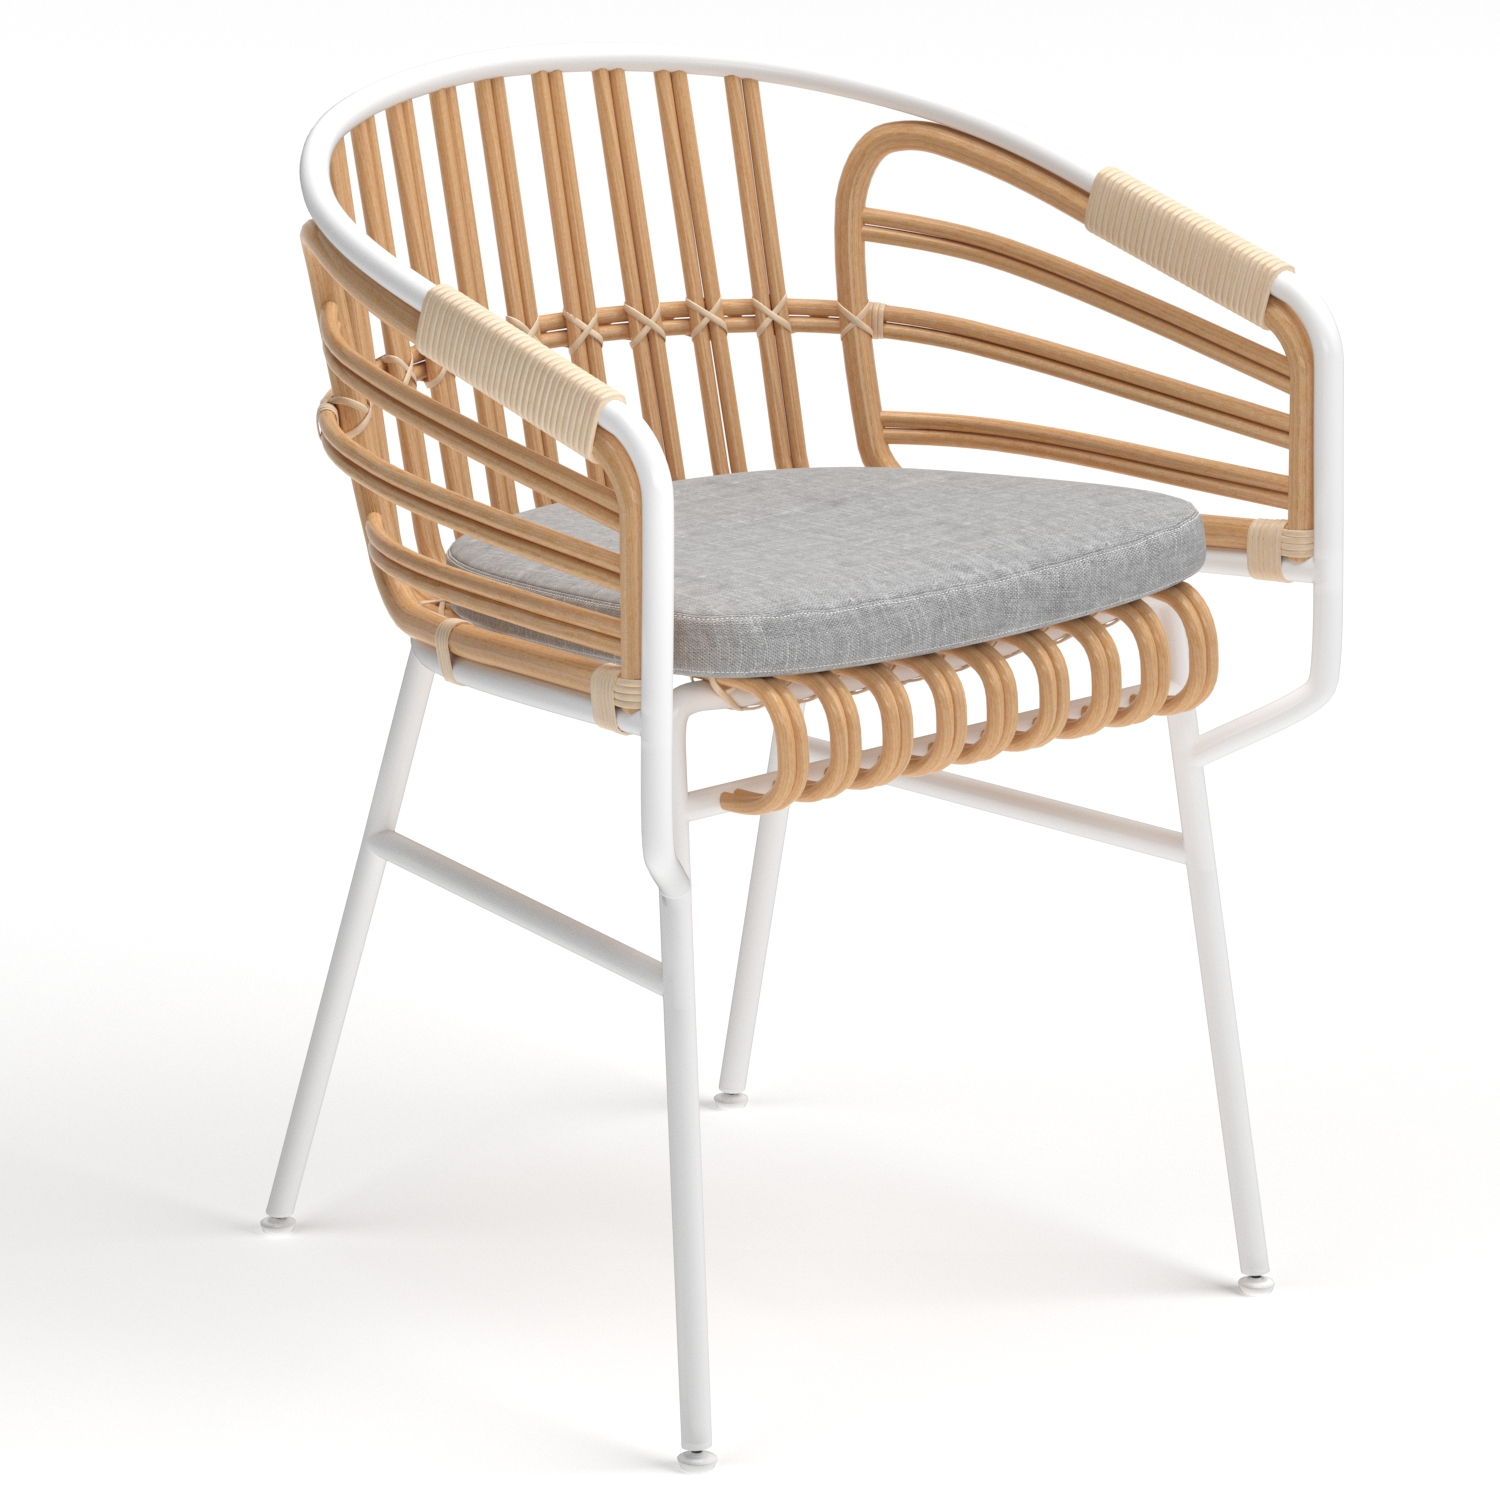 Chair rattan raphia 3D model - TurboSquid 1569486